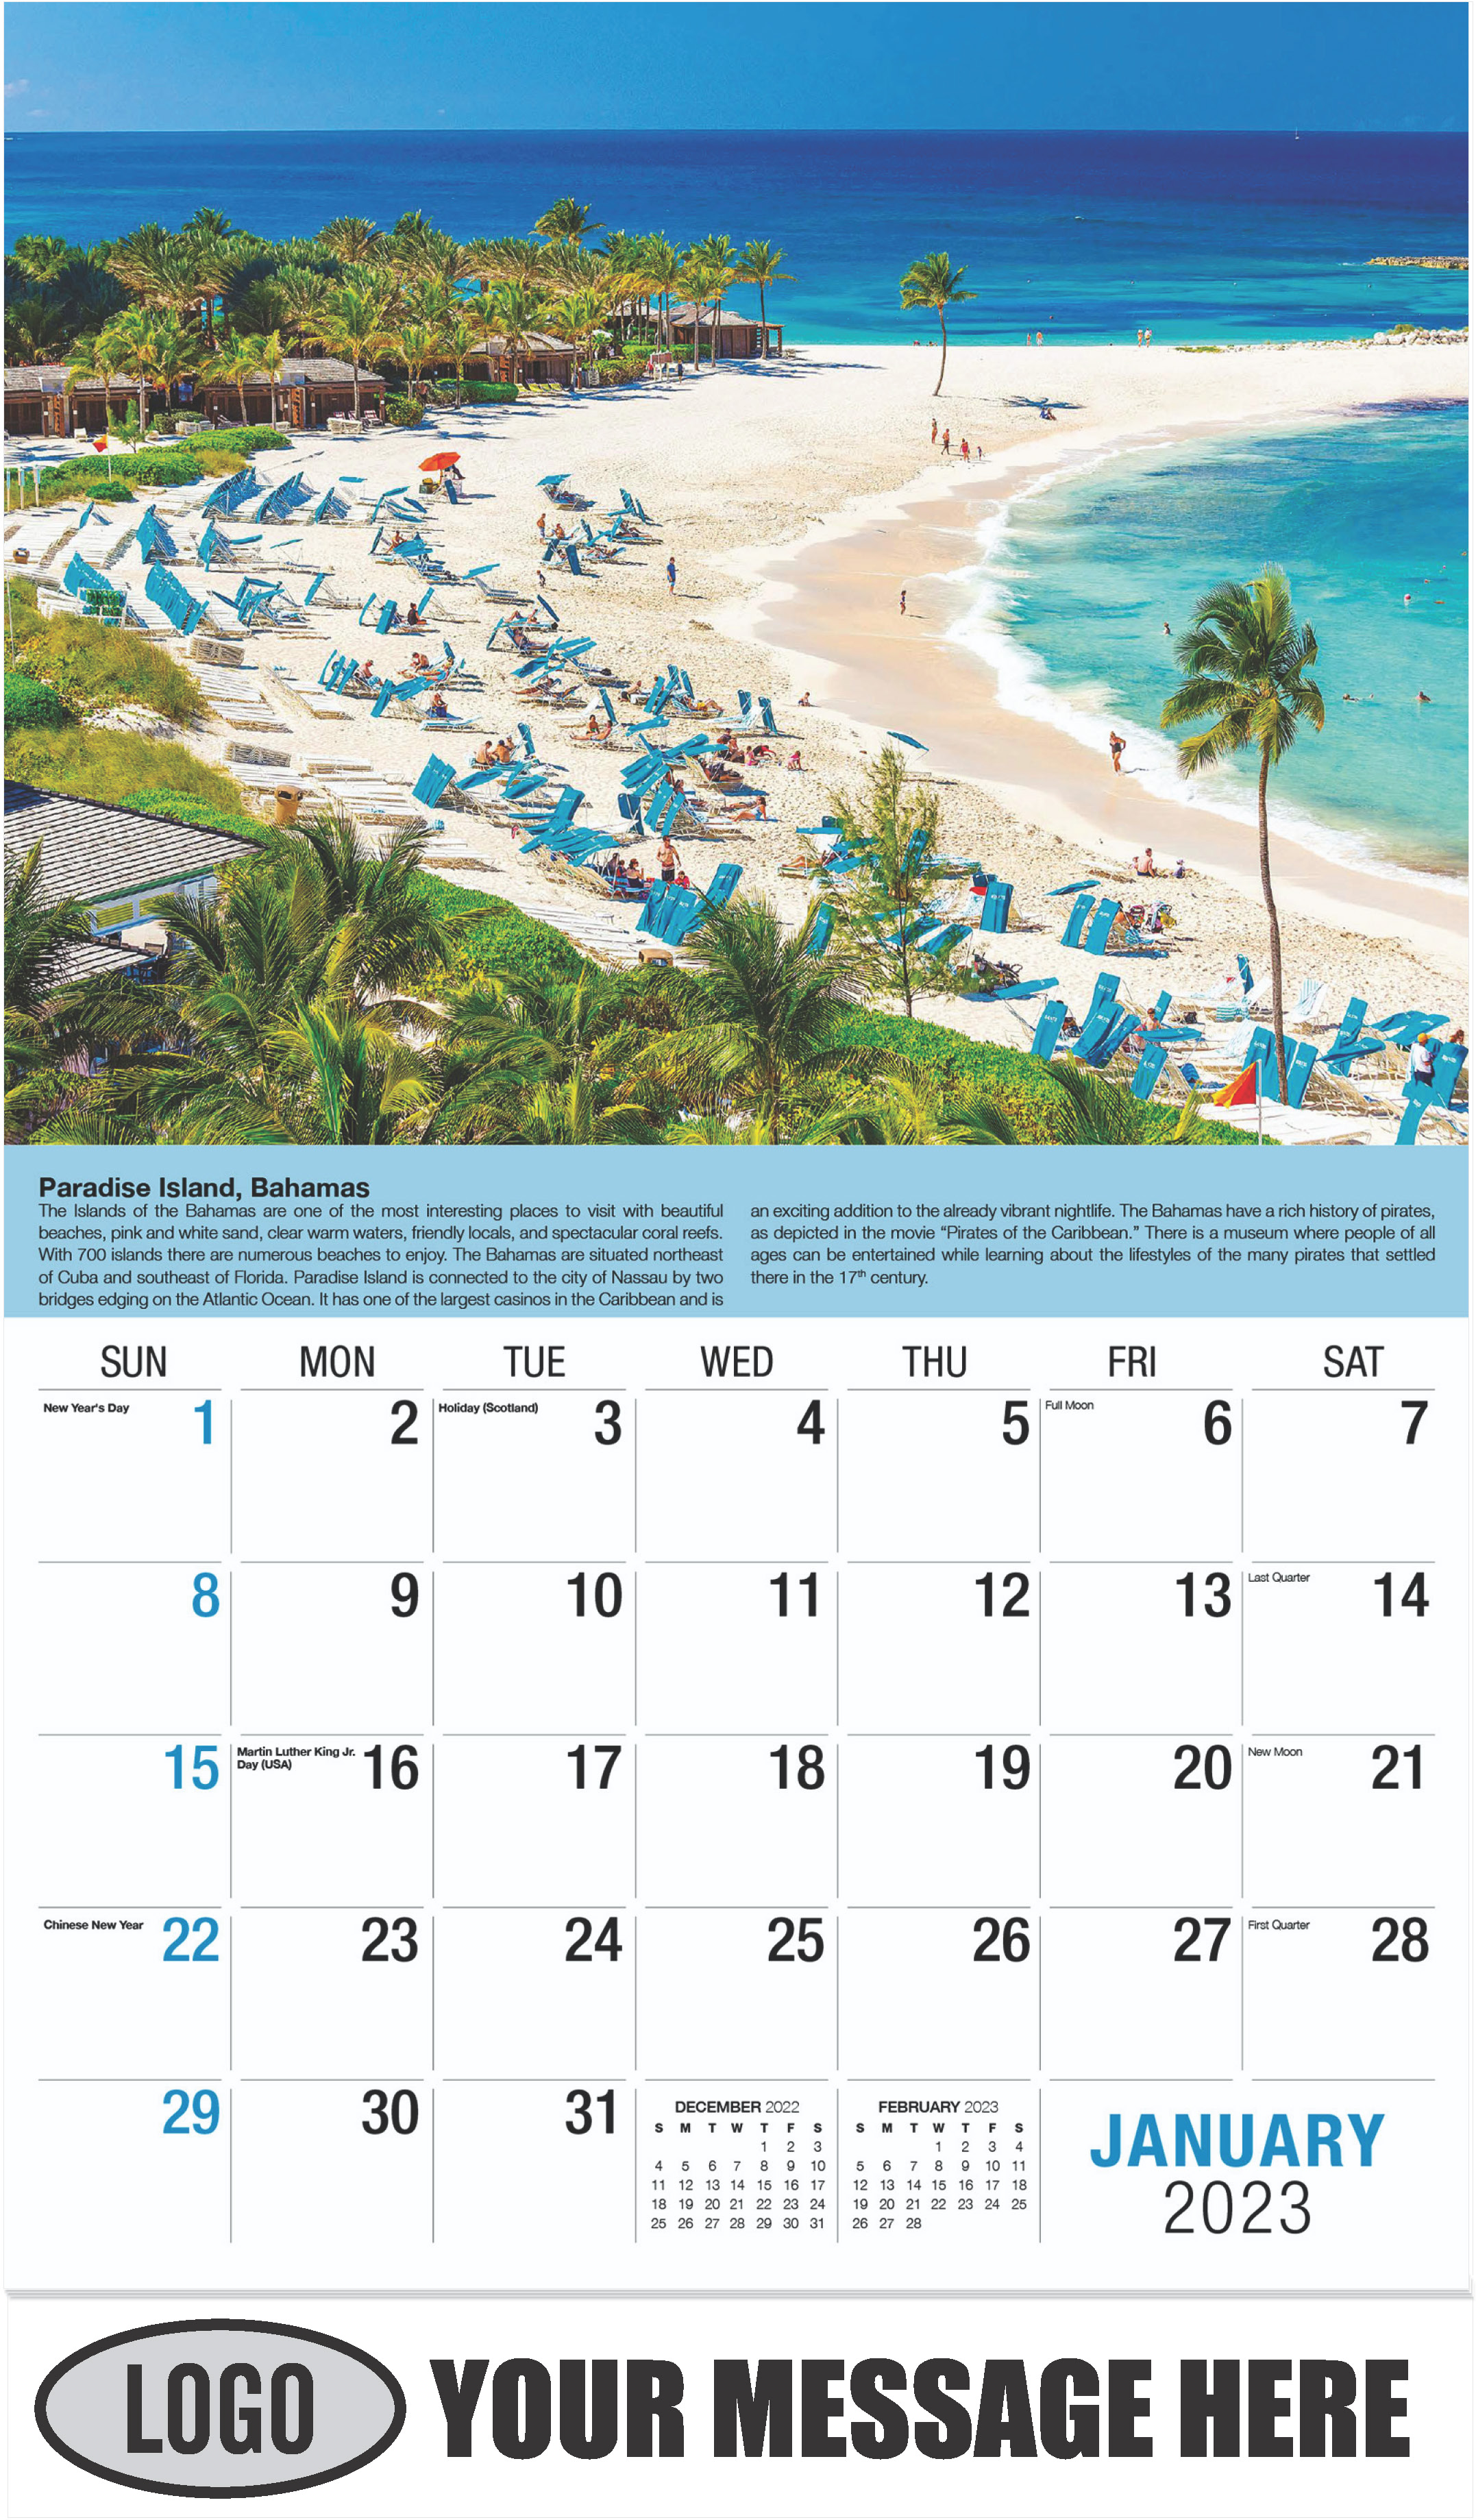 Cove Beach, Paradise Island, Bahamas - January - World Travel 2023 Promotional Calendar